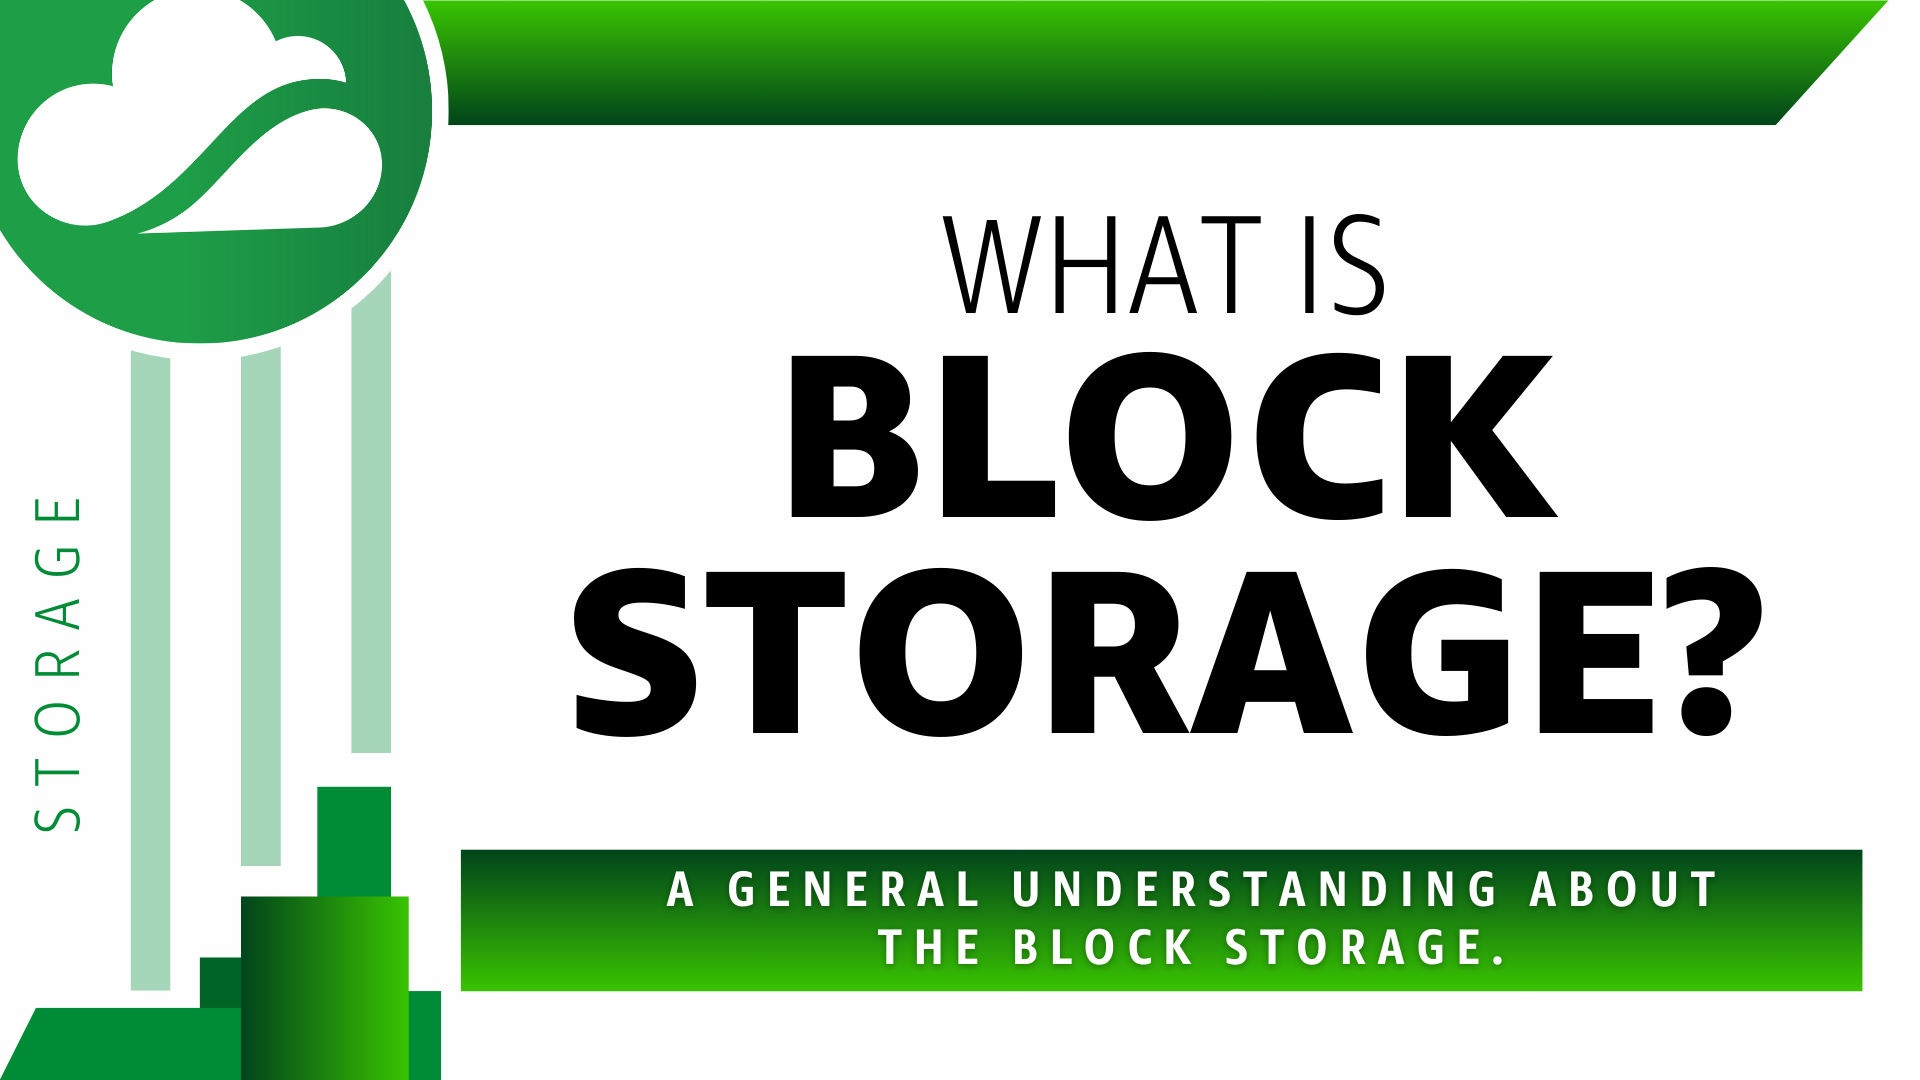 What is block storage?